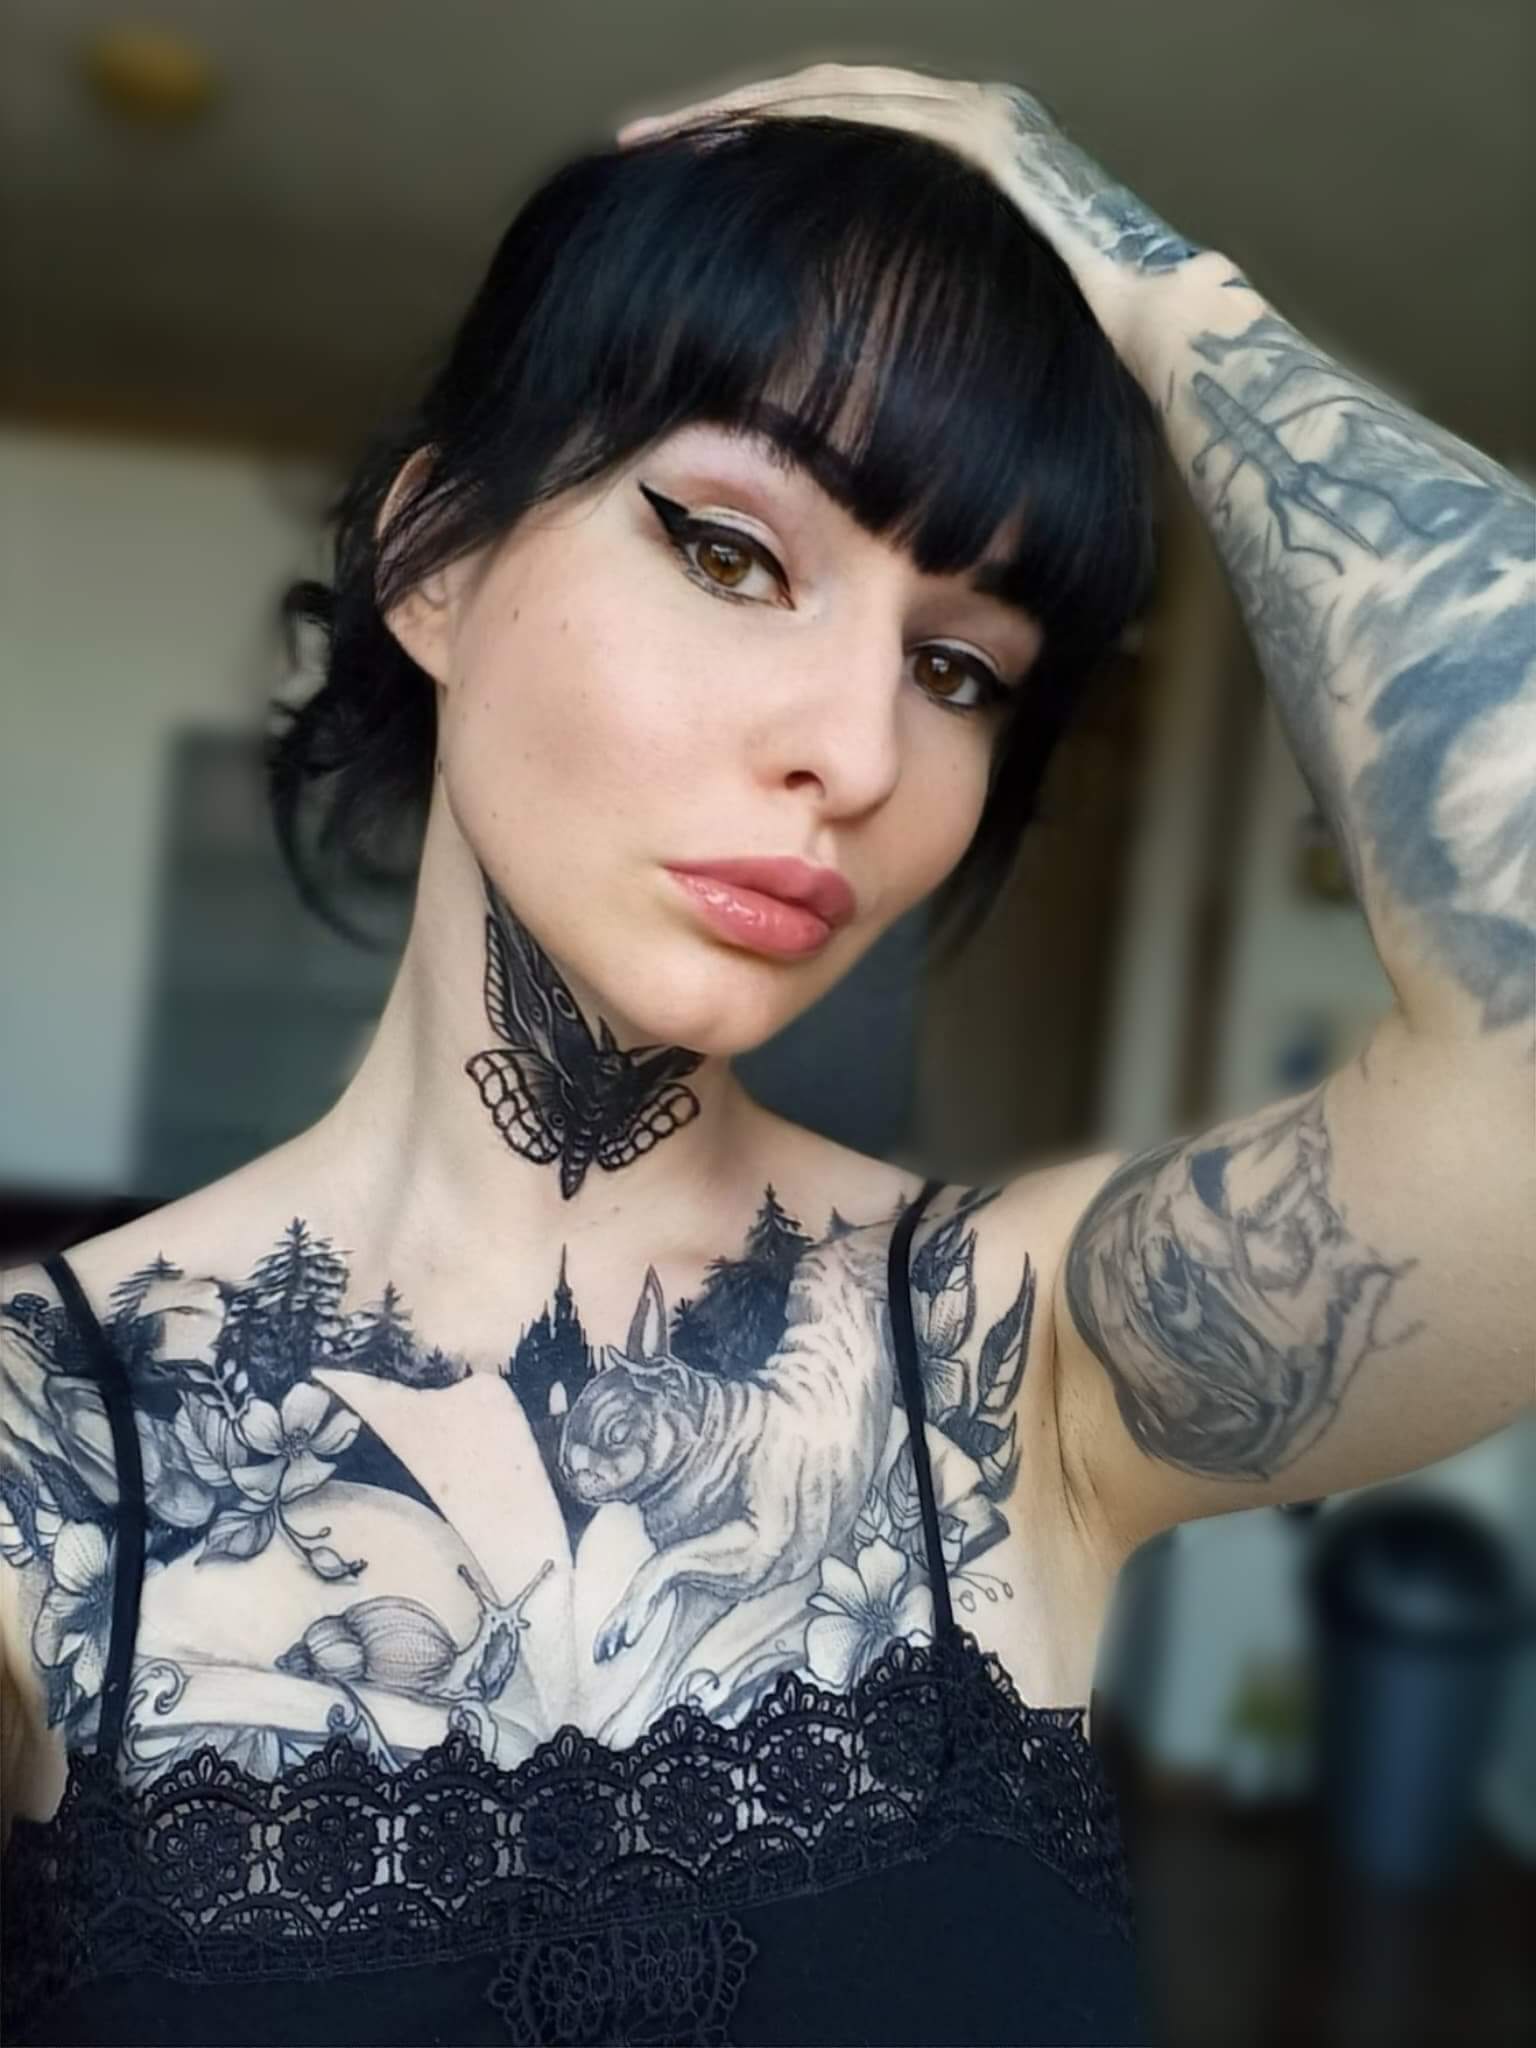 benelux miss mister tatoo contest